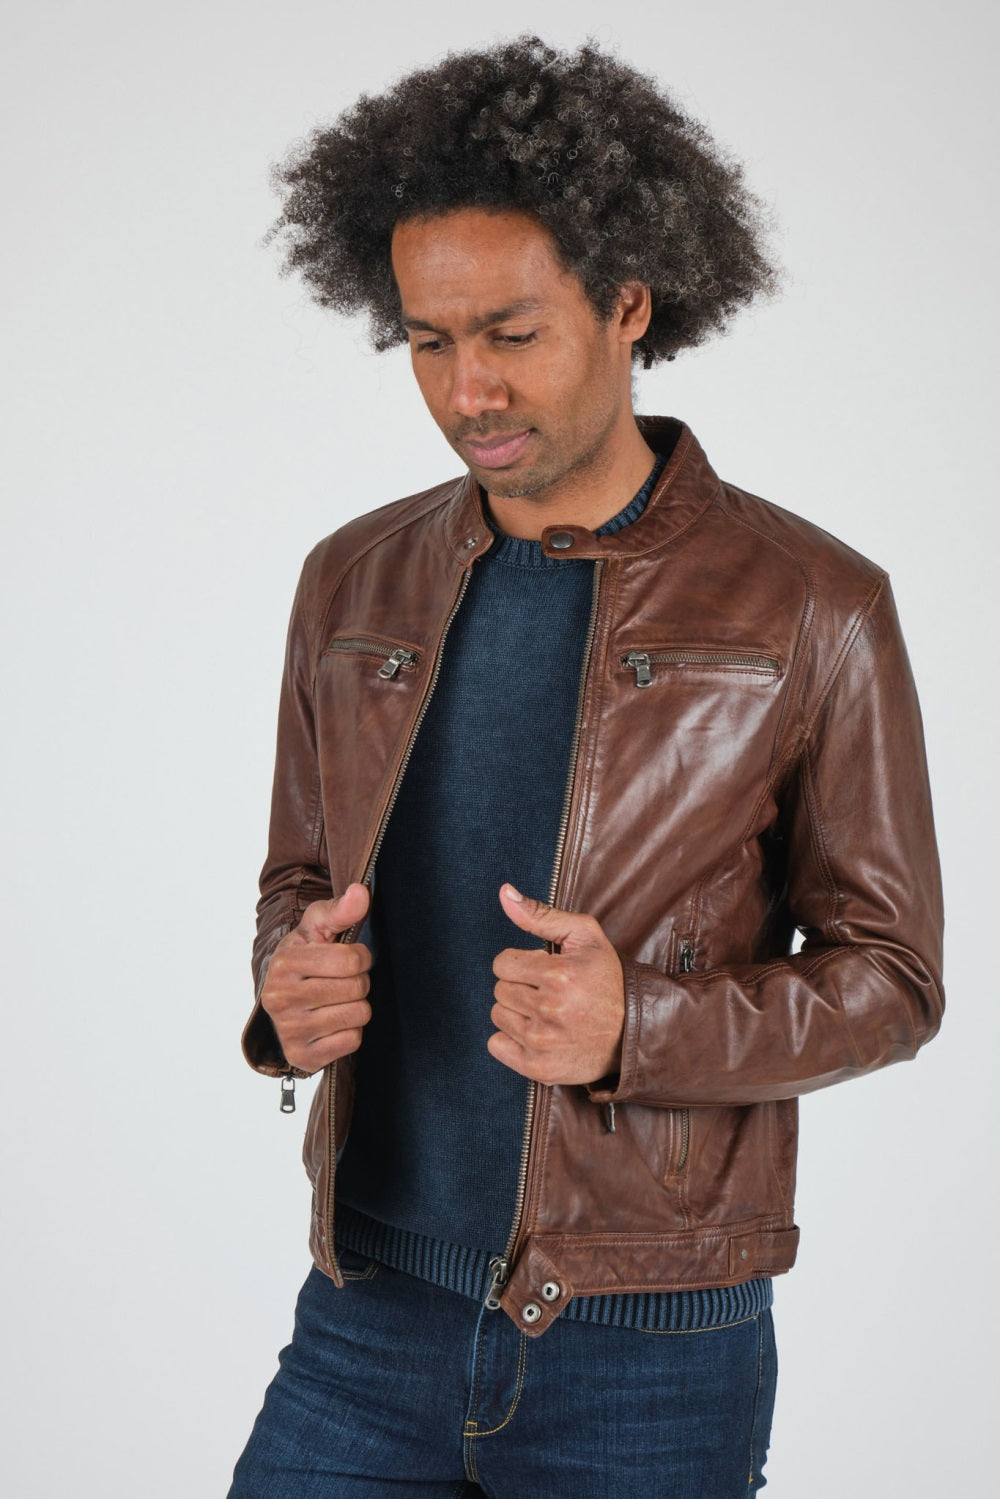 Men Genuine Leather Jacket MJ113 SkinOutfit